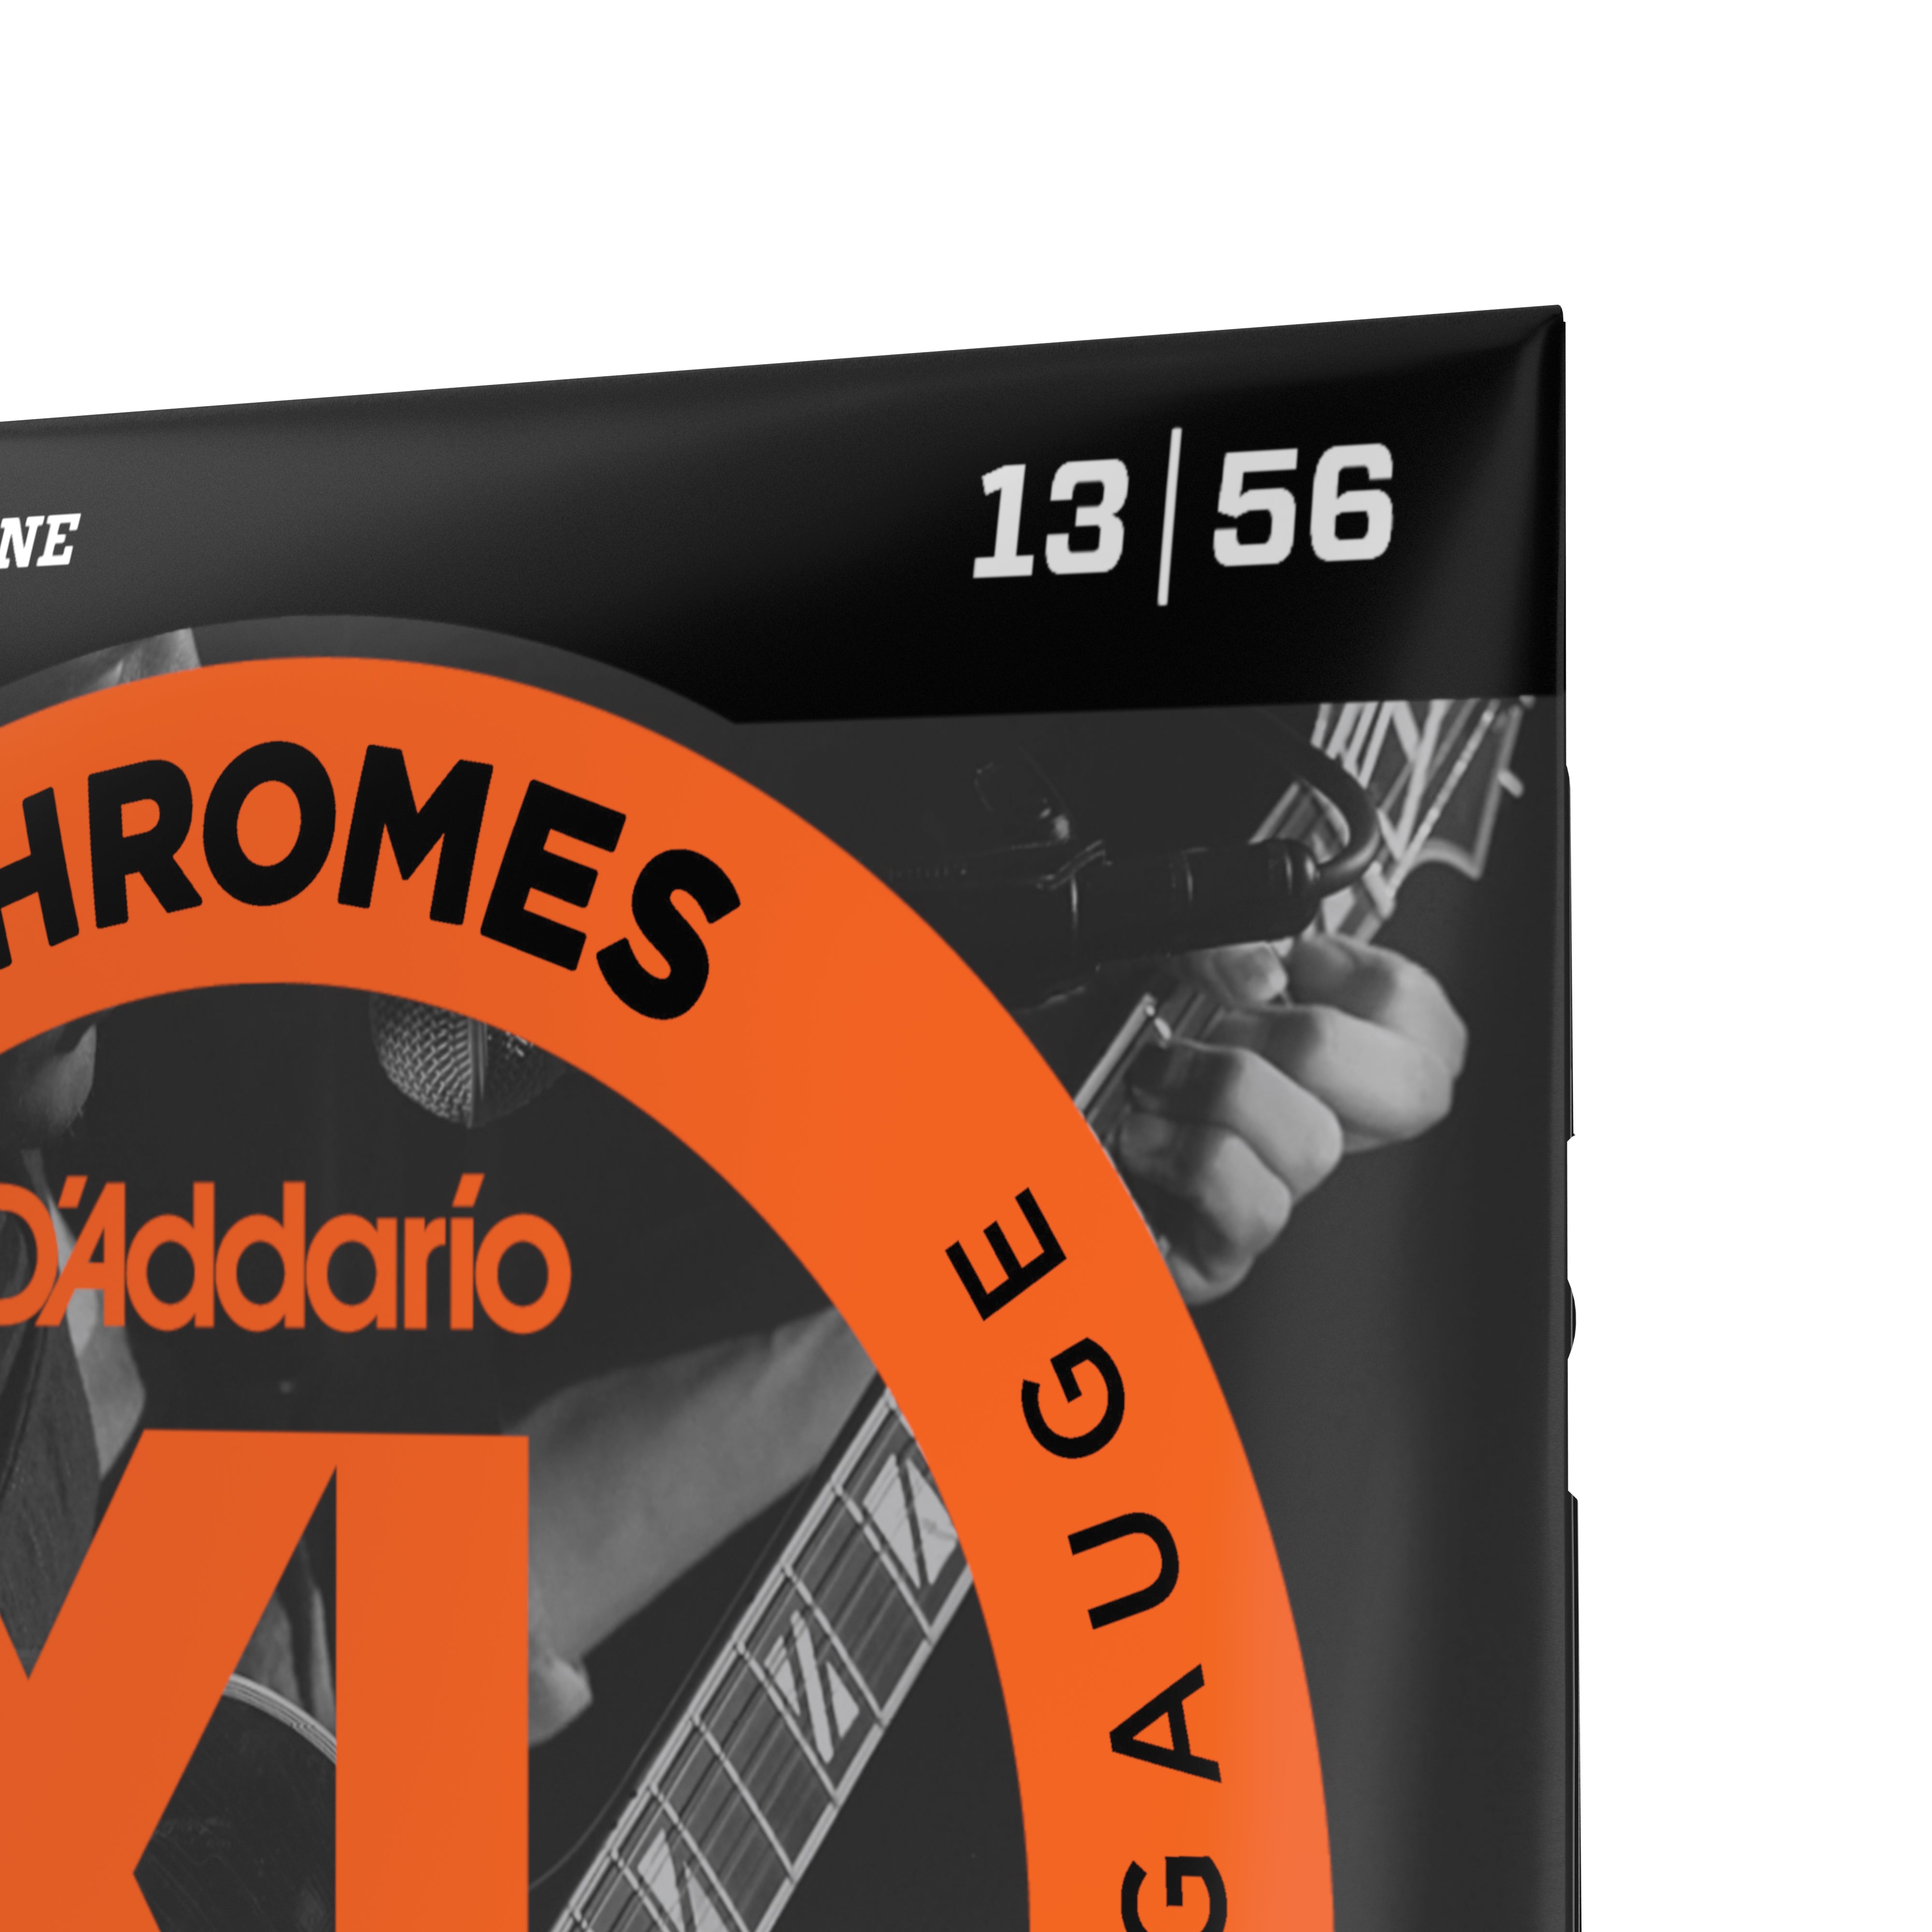 D'Addario ECG26 Flatwound Chromes Steel 13-56 Electric Guitar Strings, Medium